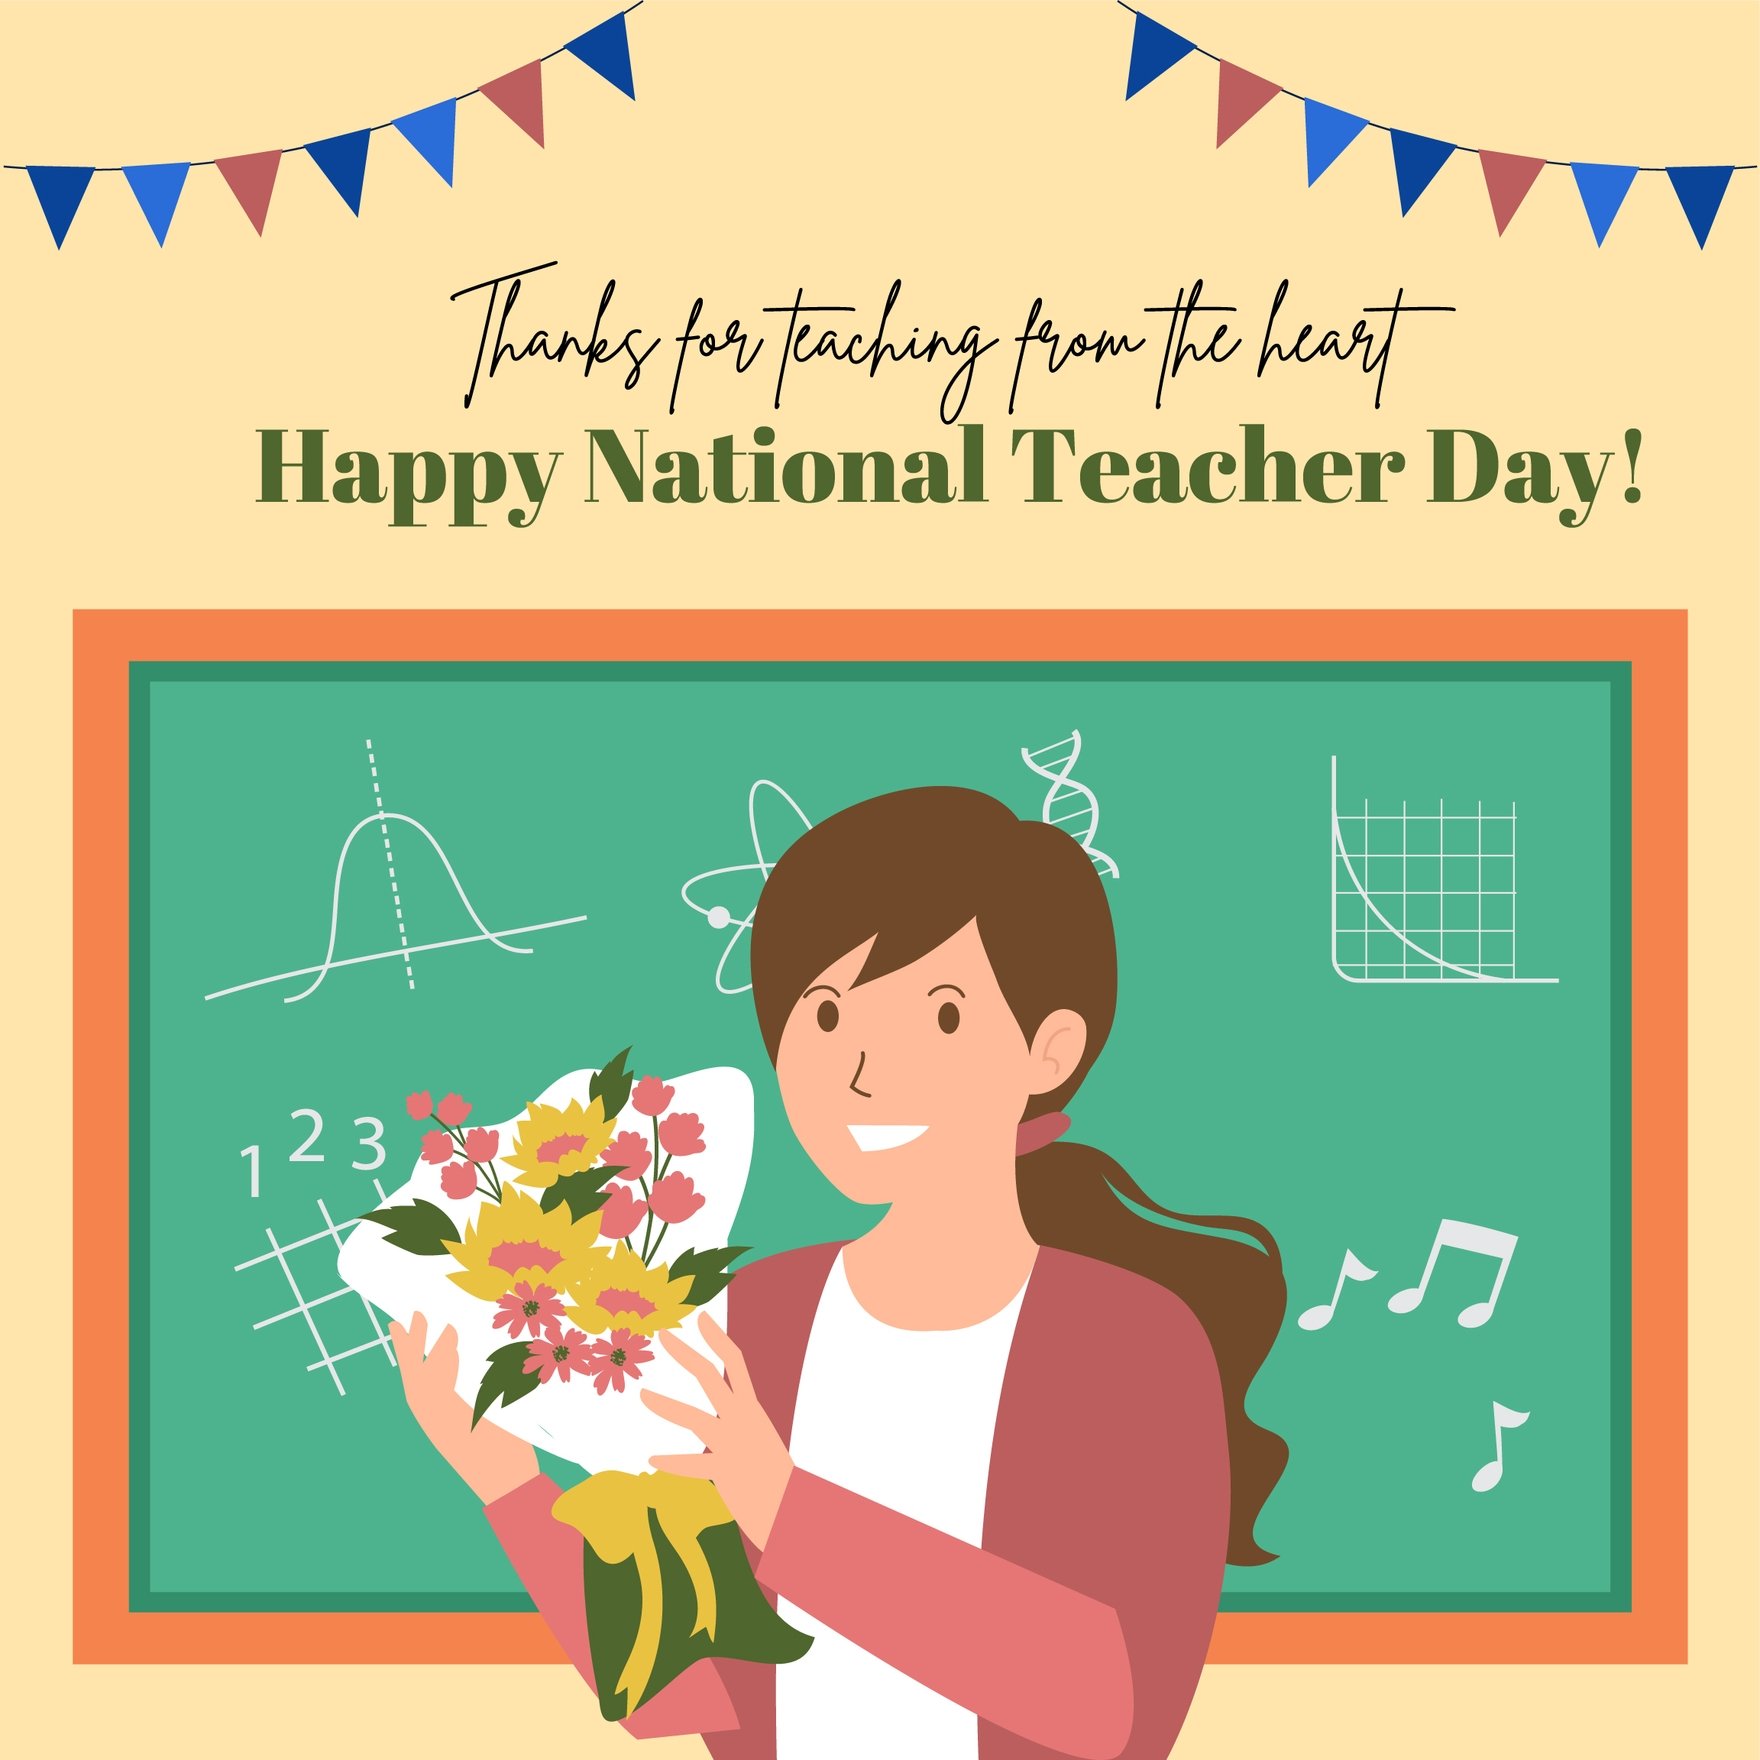 National Teacher Day Greeting Card Vector in Illustrator, PSD, EPS, SVG, JPG, PNG